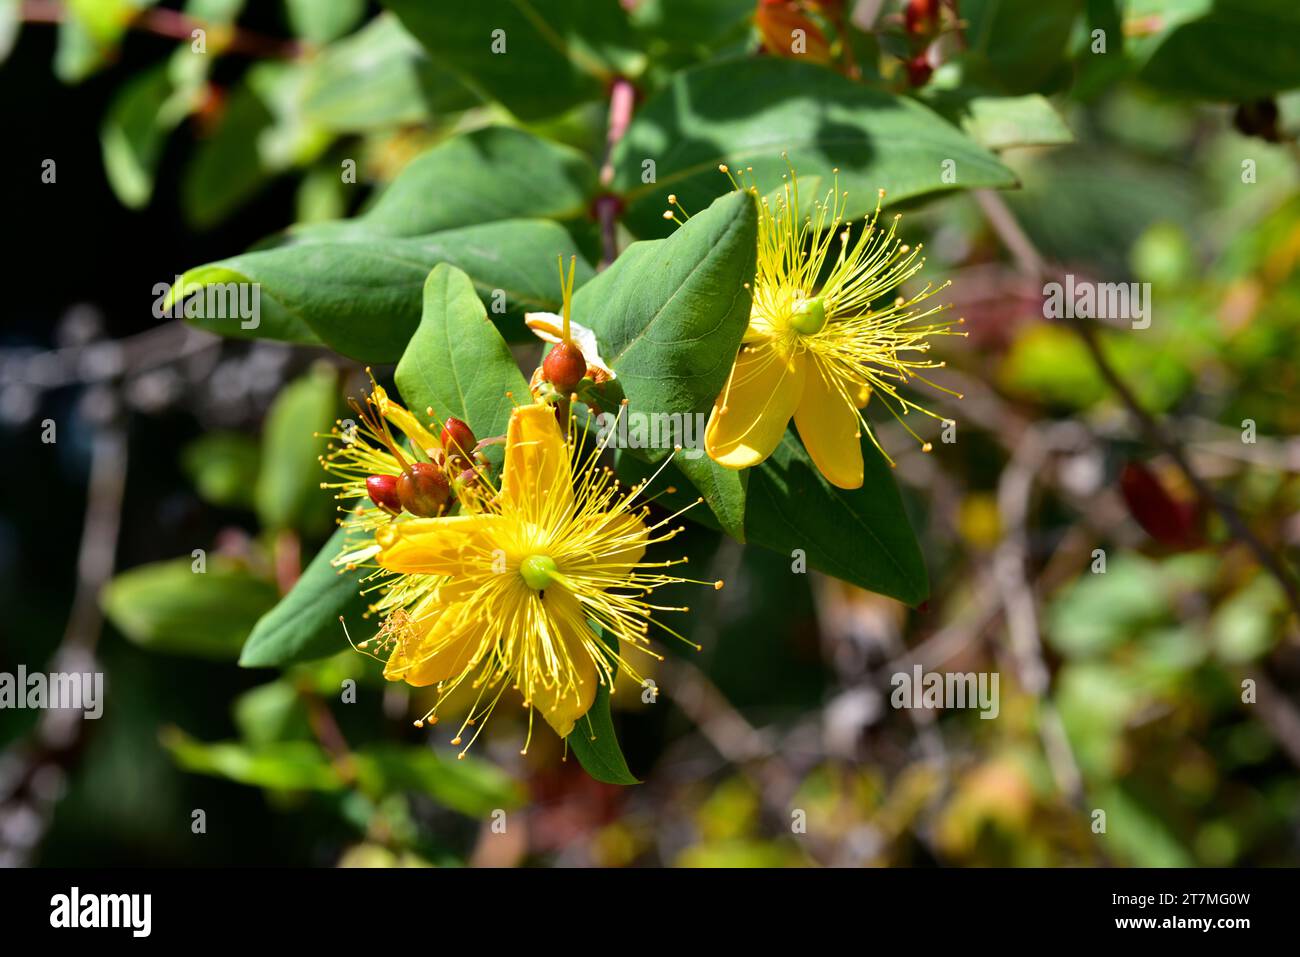 Malfurada (Hypericum grandifolium) is a shrub endemic to Canary Islands and Madeira. Stock Photo